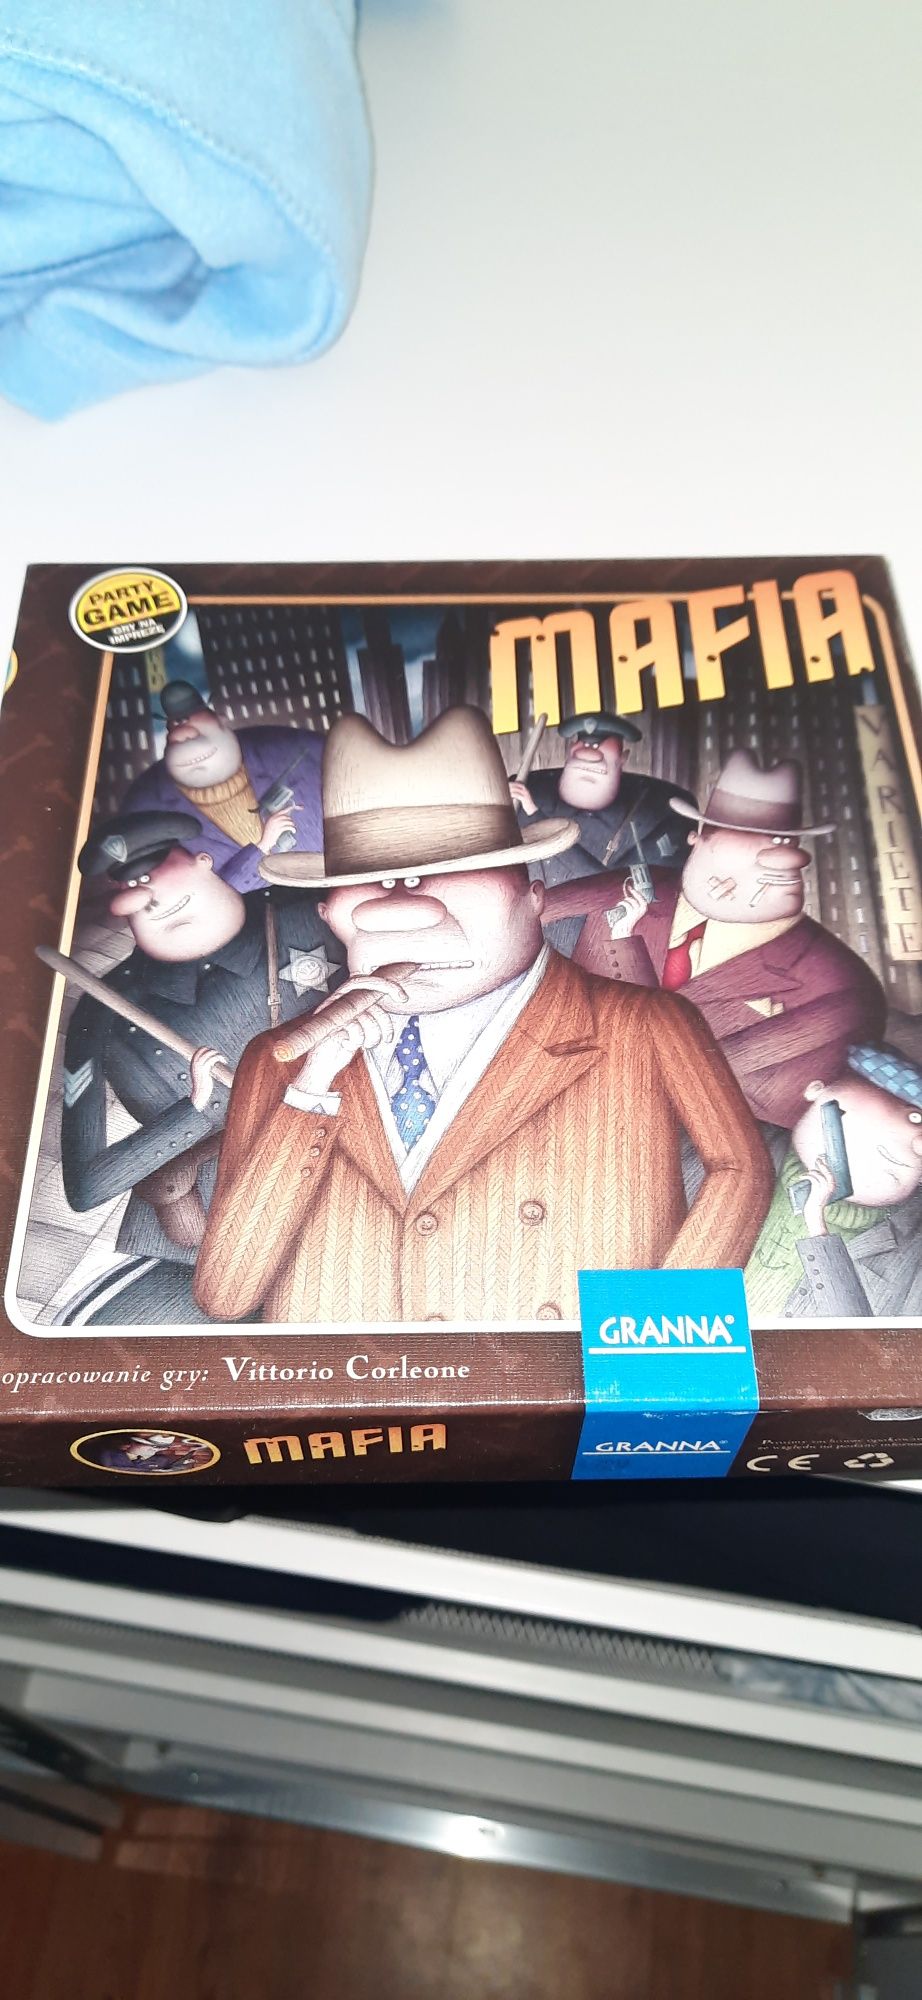 Gra planszowa Mafia